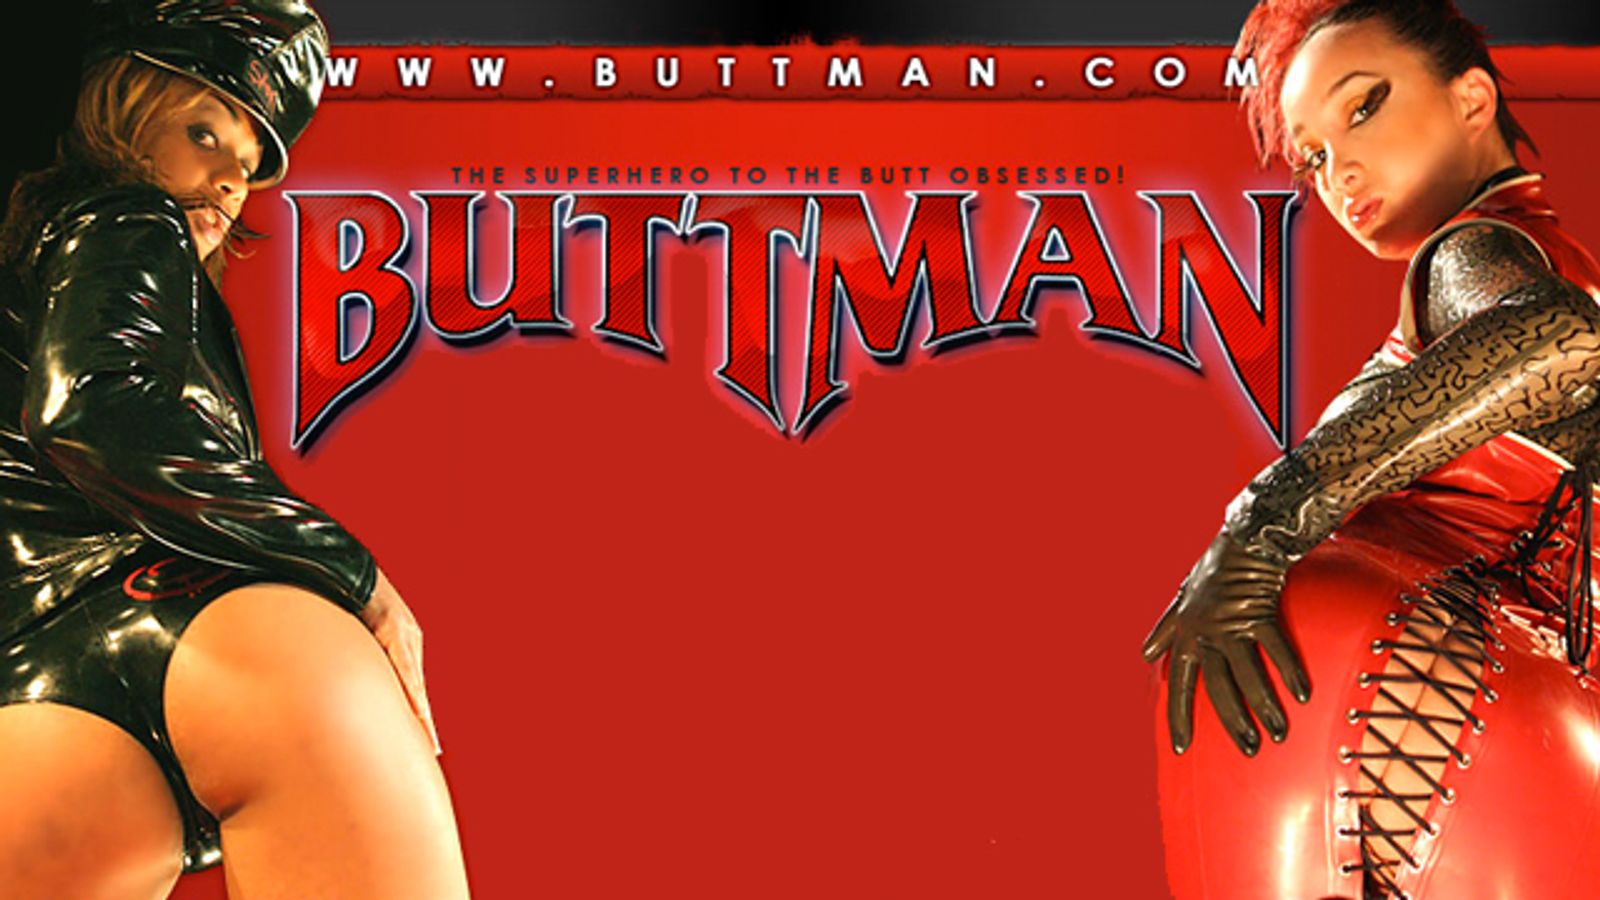 Buttman com